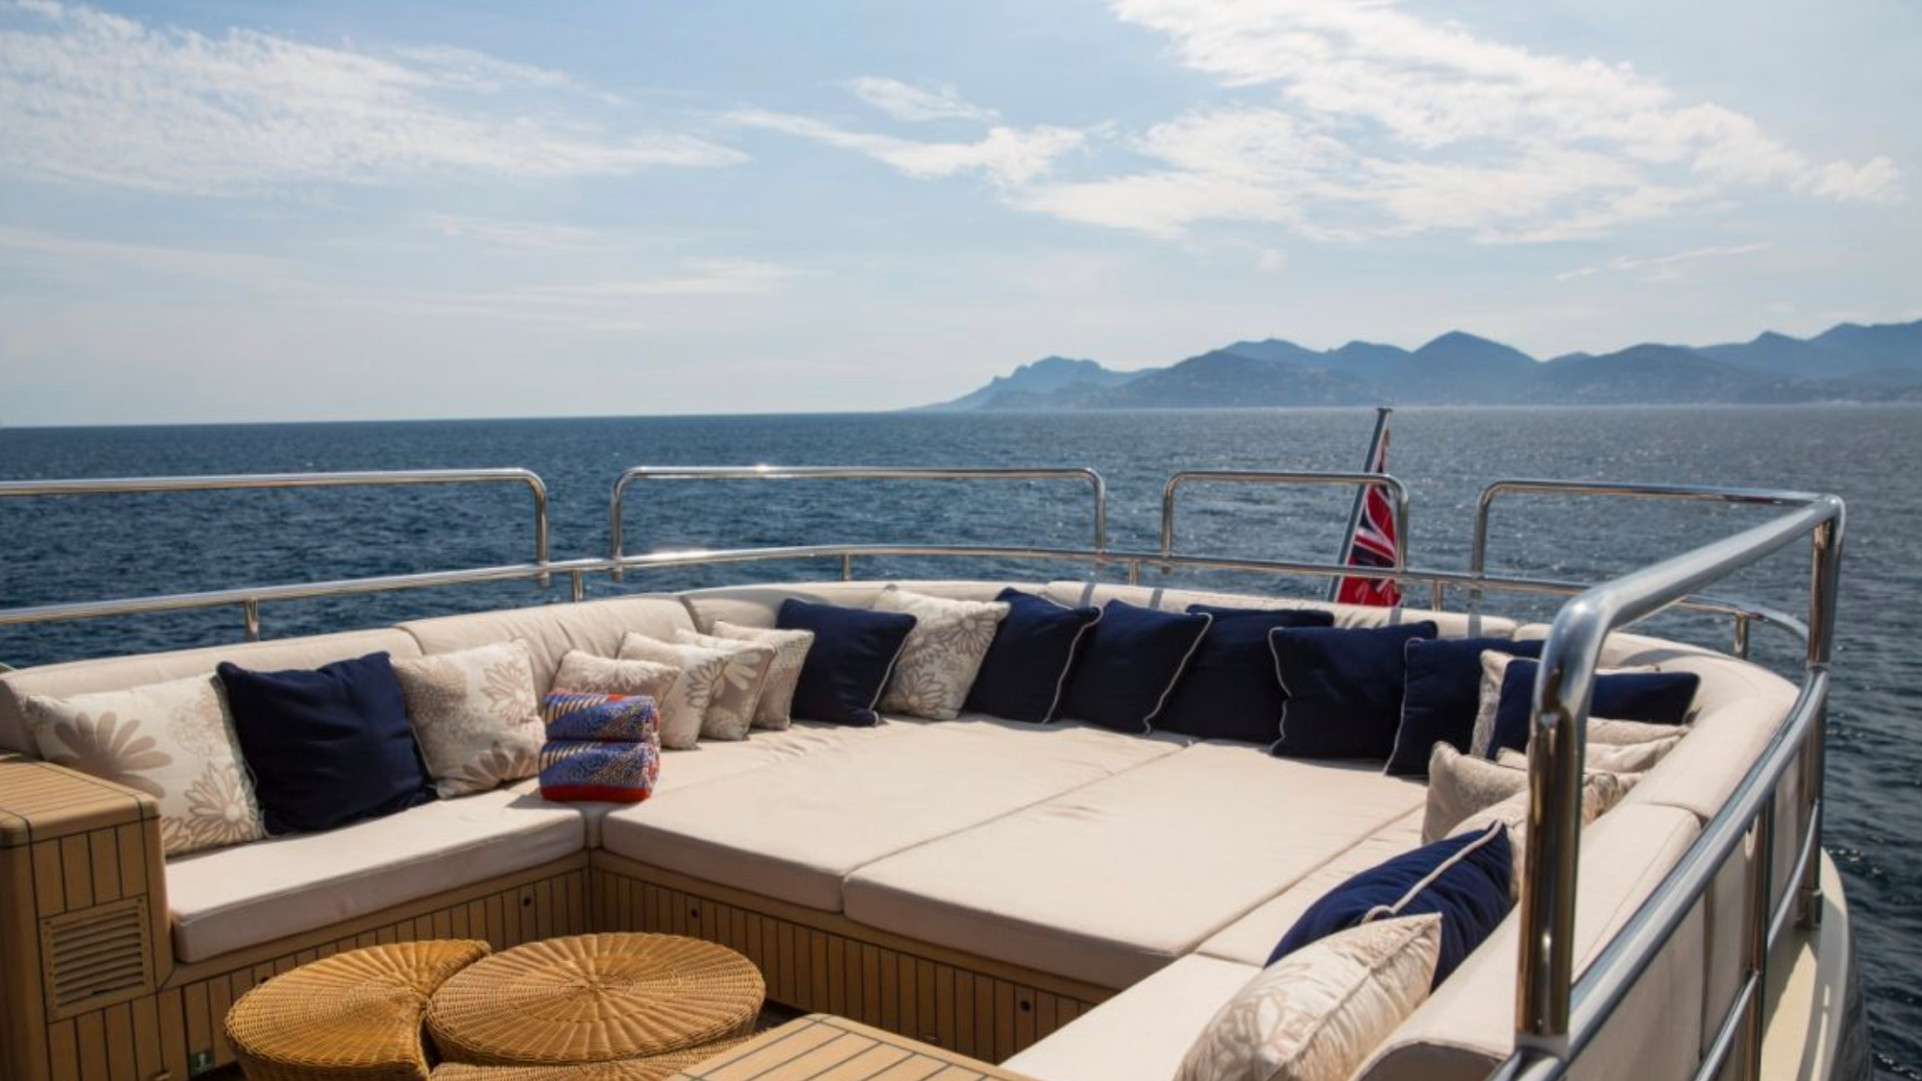 YCM 120 - Luxury yacht charter Antigua and Barbuda & Boat hire in Riviera, Corsica, Sardinia, Spain, Balearics, Caribbean 5